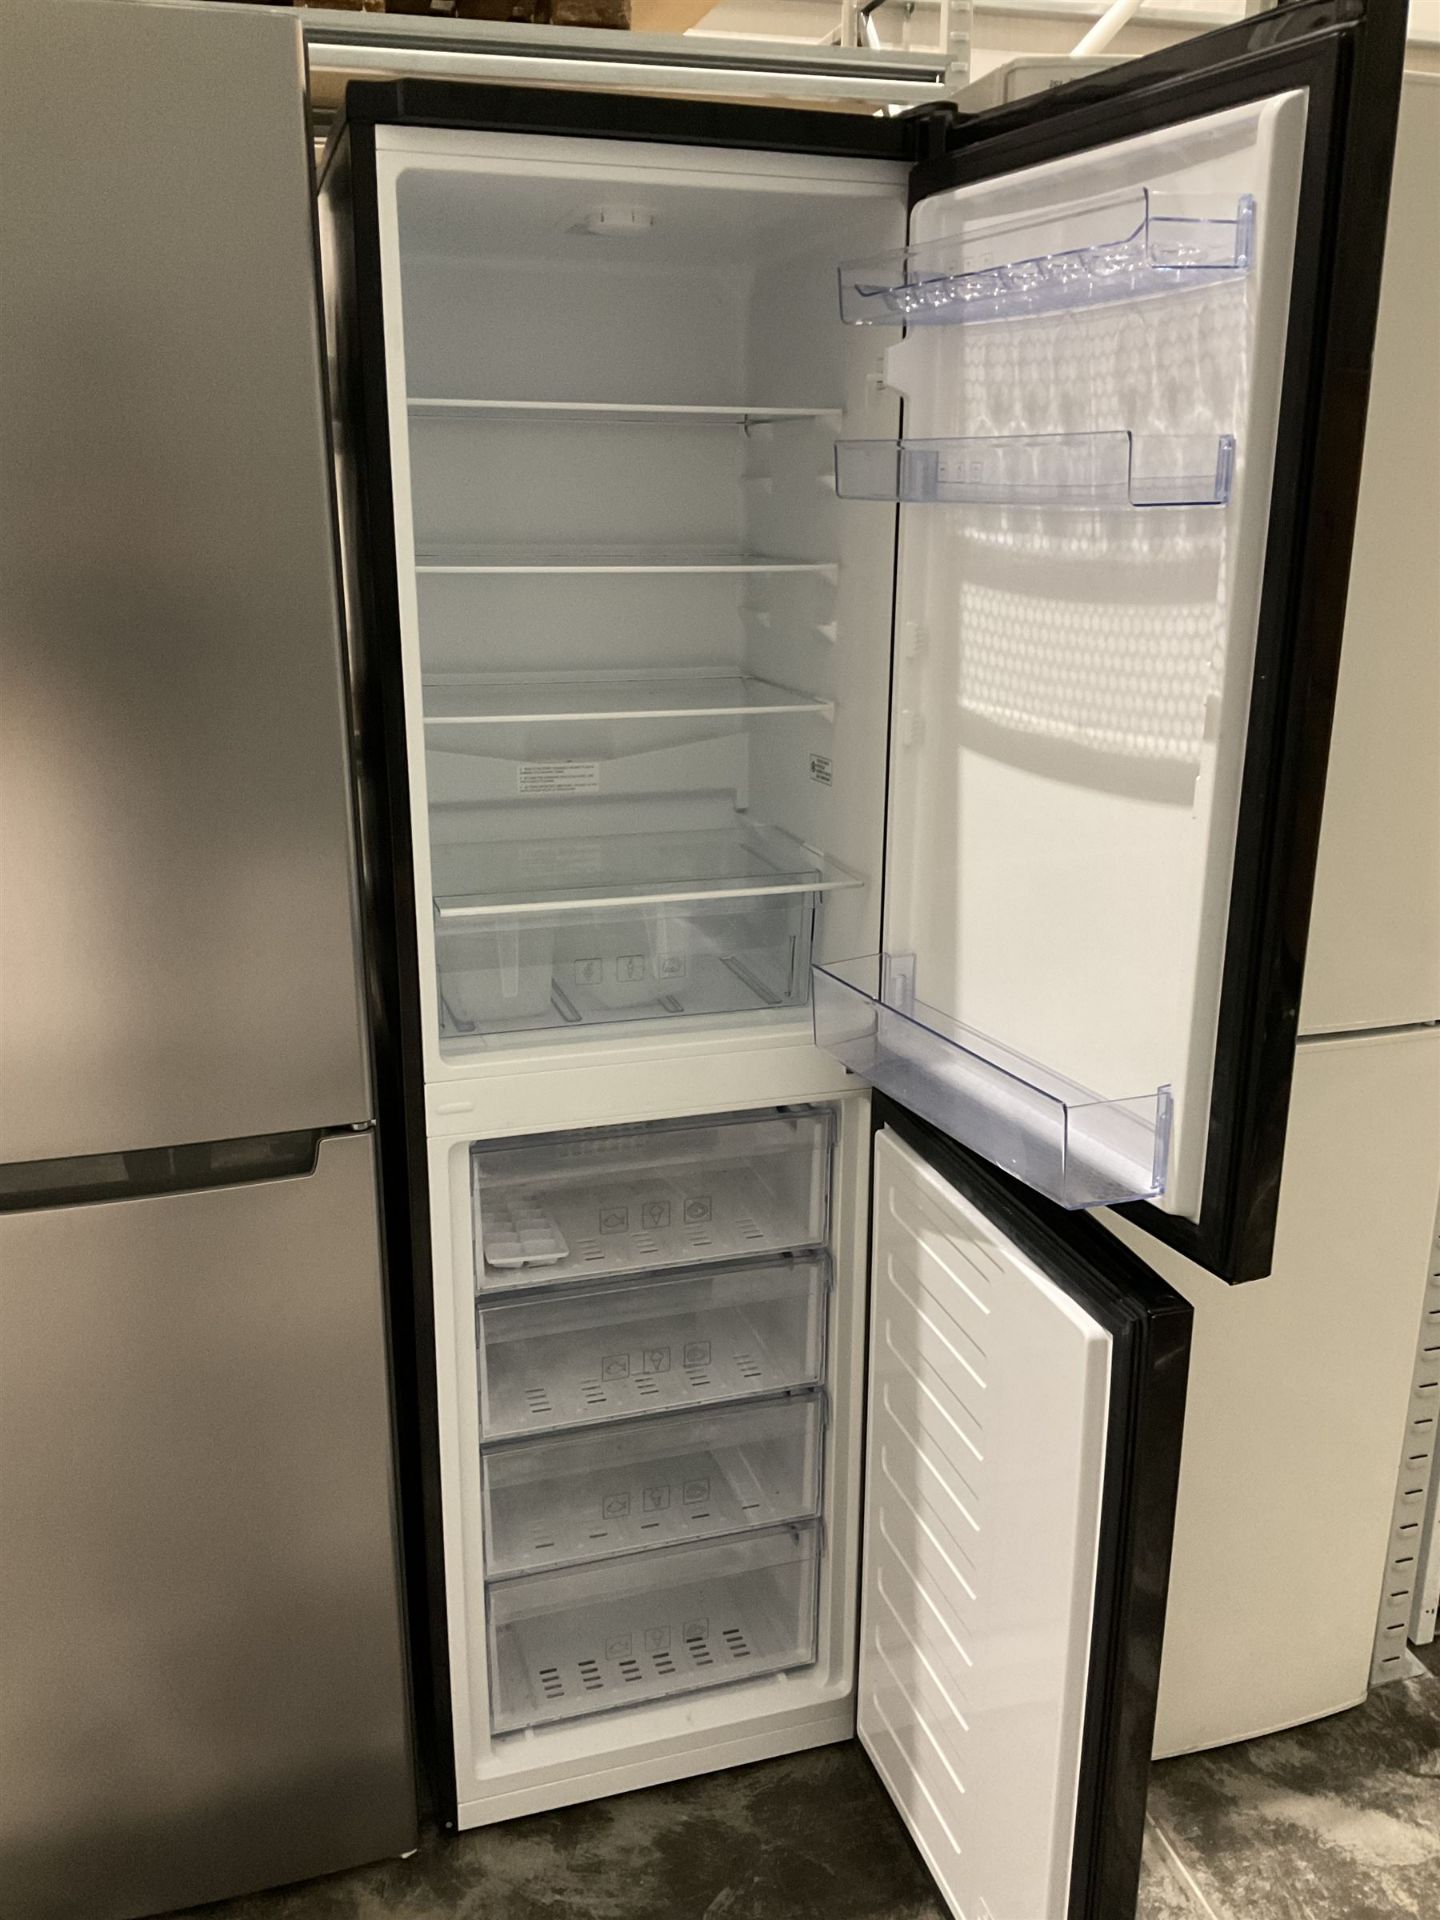 Beko CFG1592B fridge freezer in black